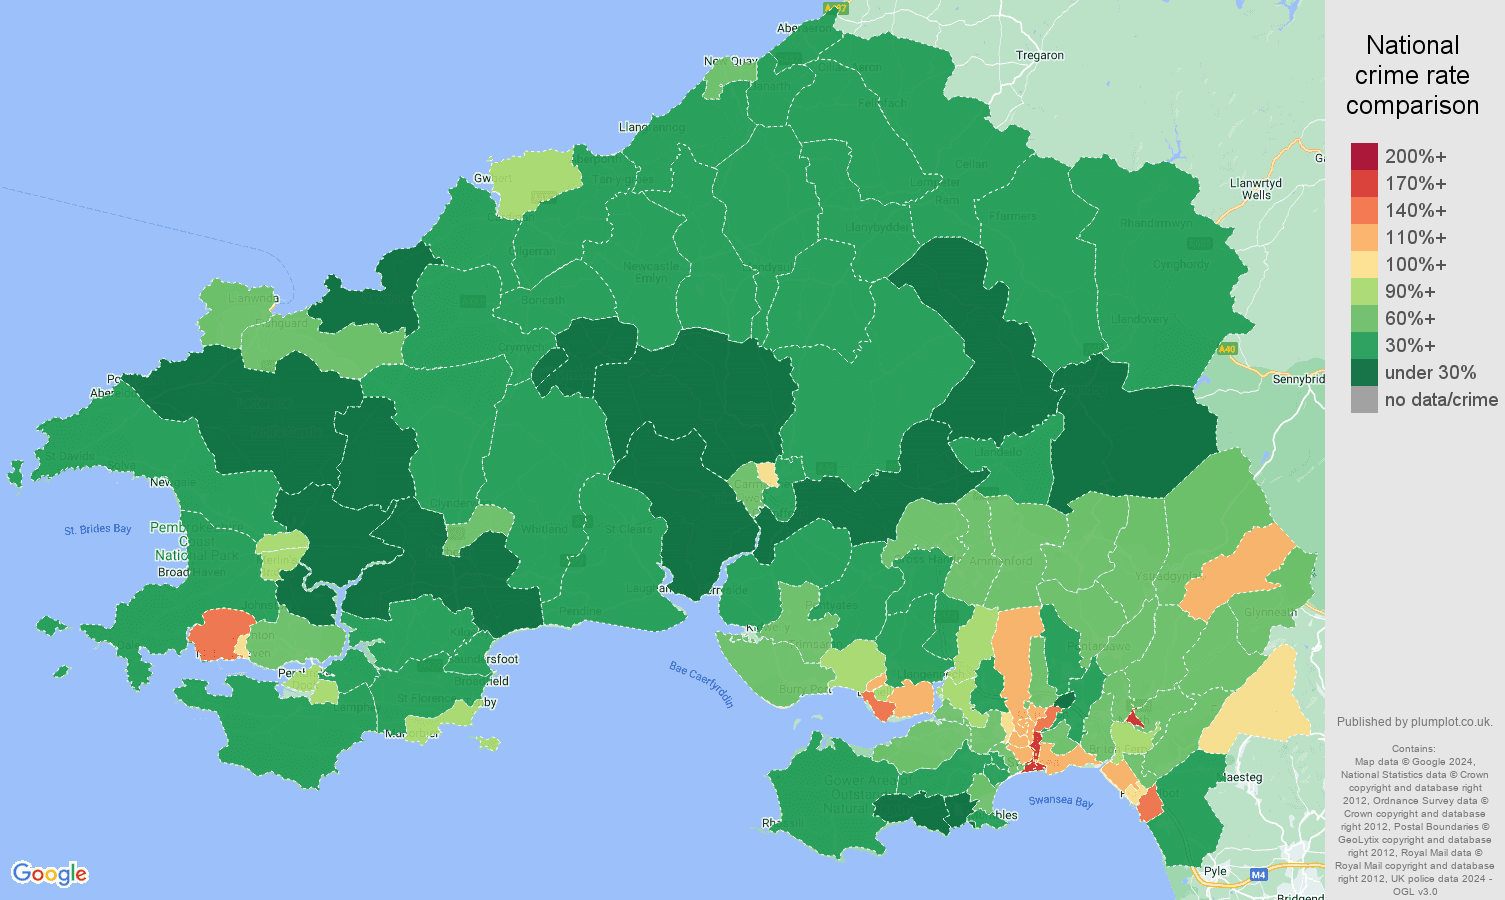 Swansea crime rate comparison map